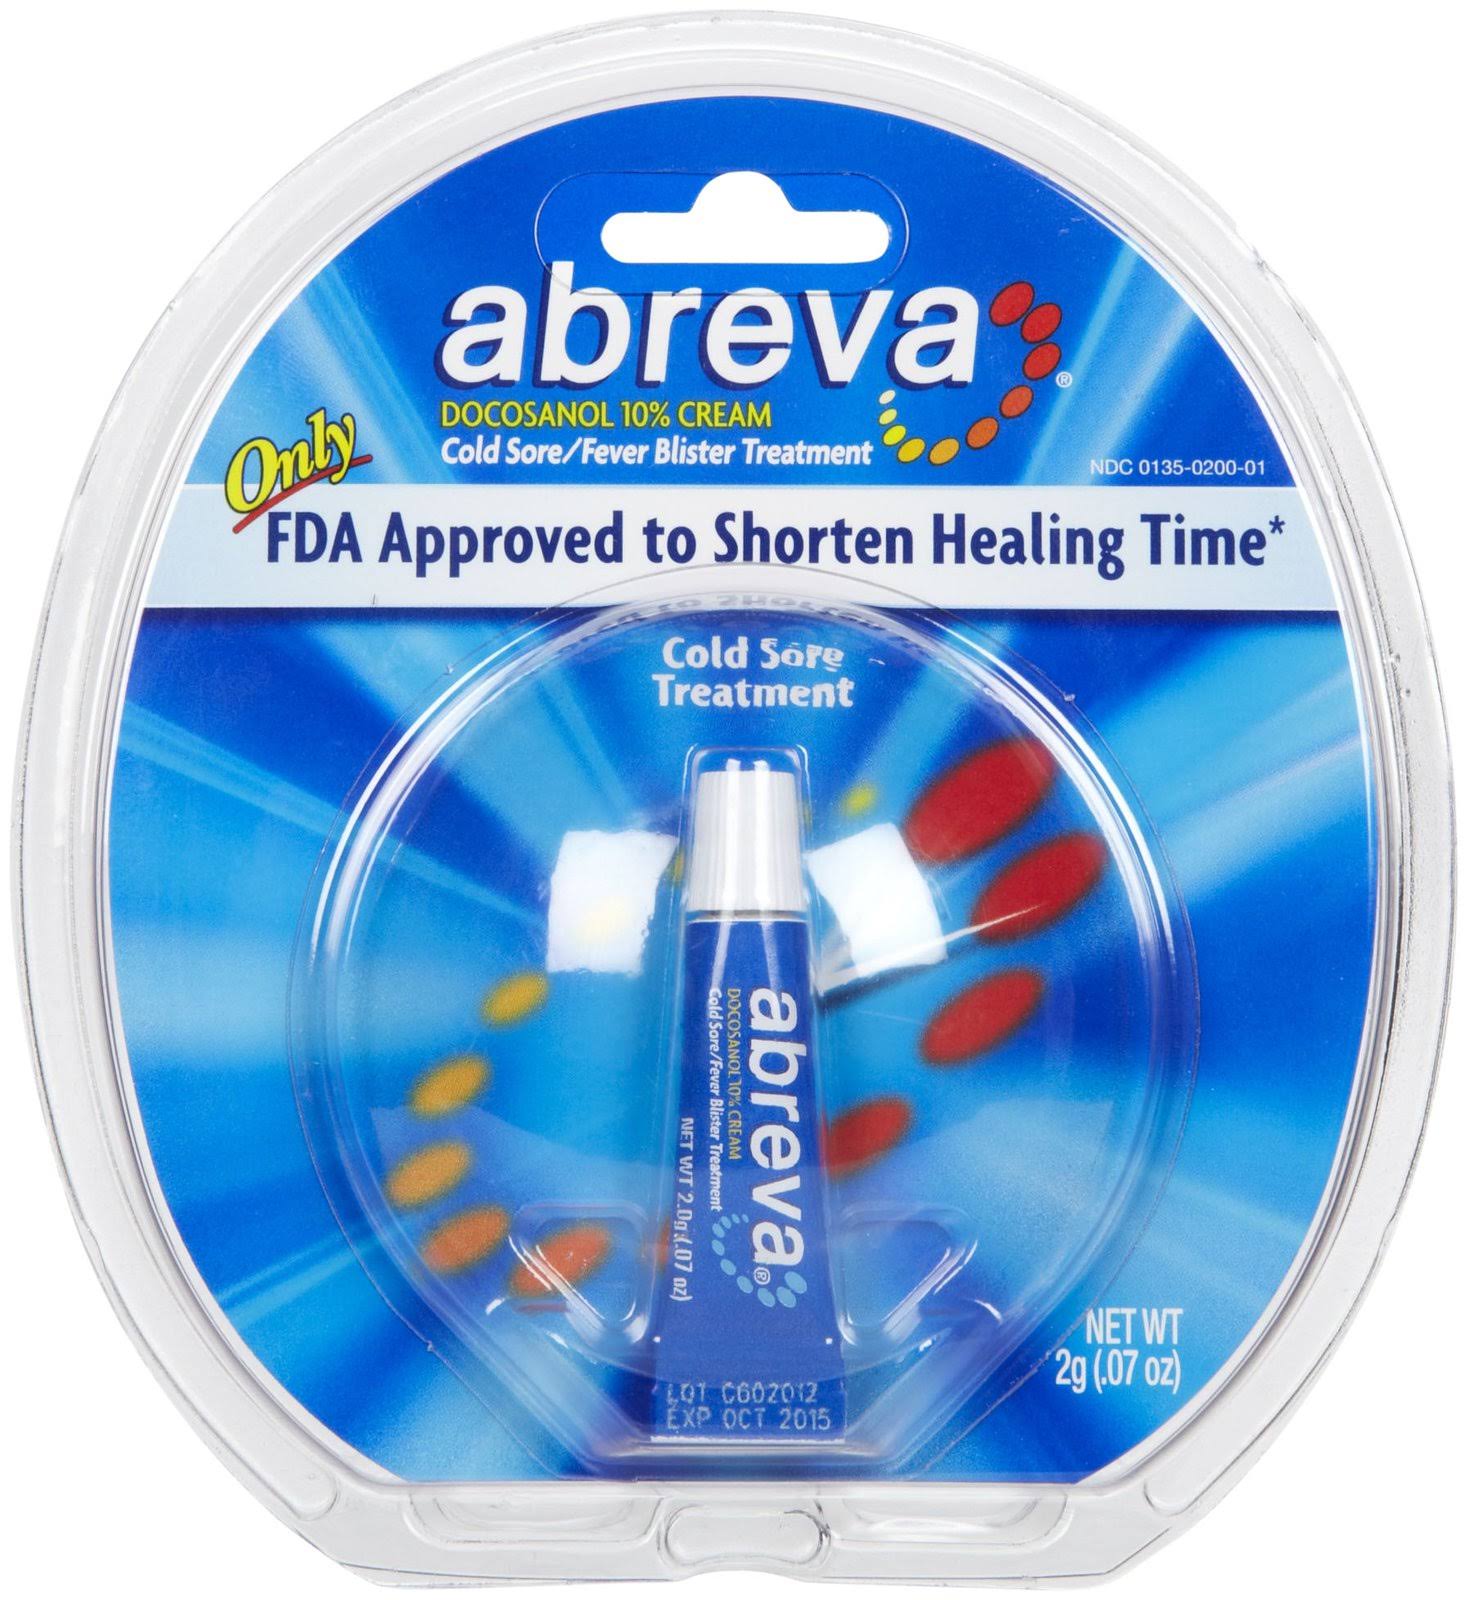 Abreva Cold Sore Fever Blister Treatment Cream - 2g